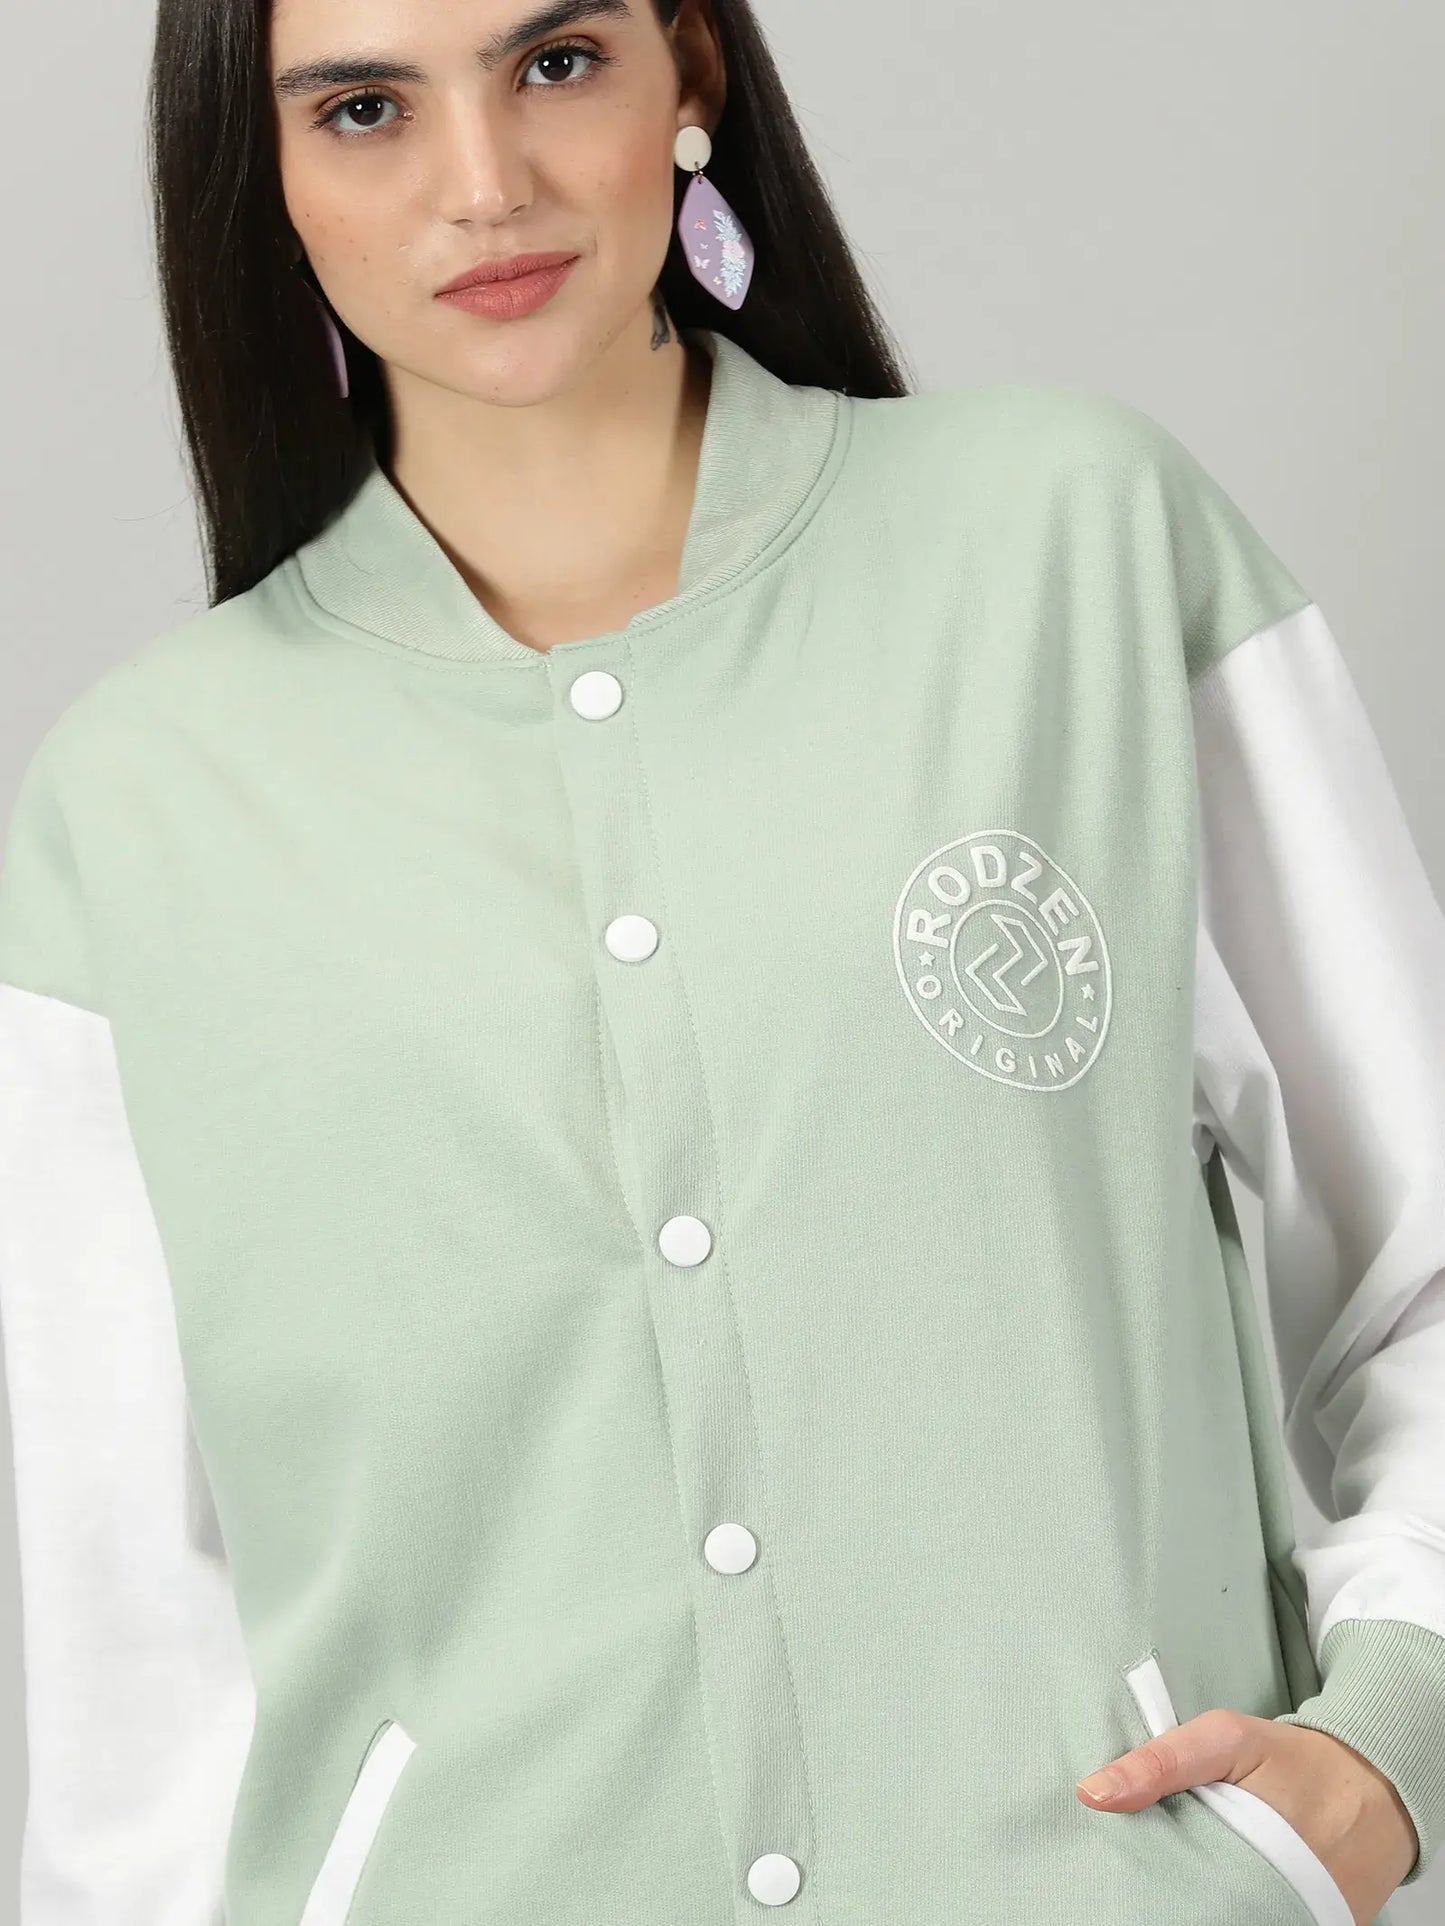 Pista Green Women Varsity Jacket